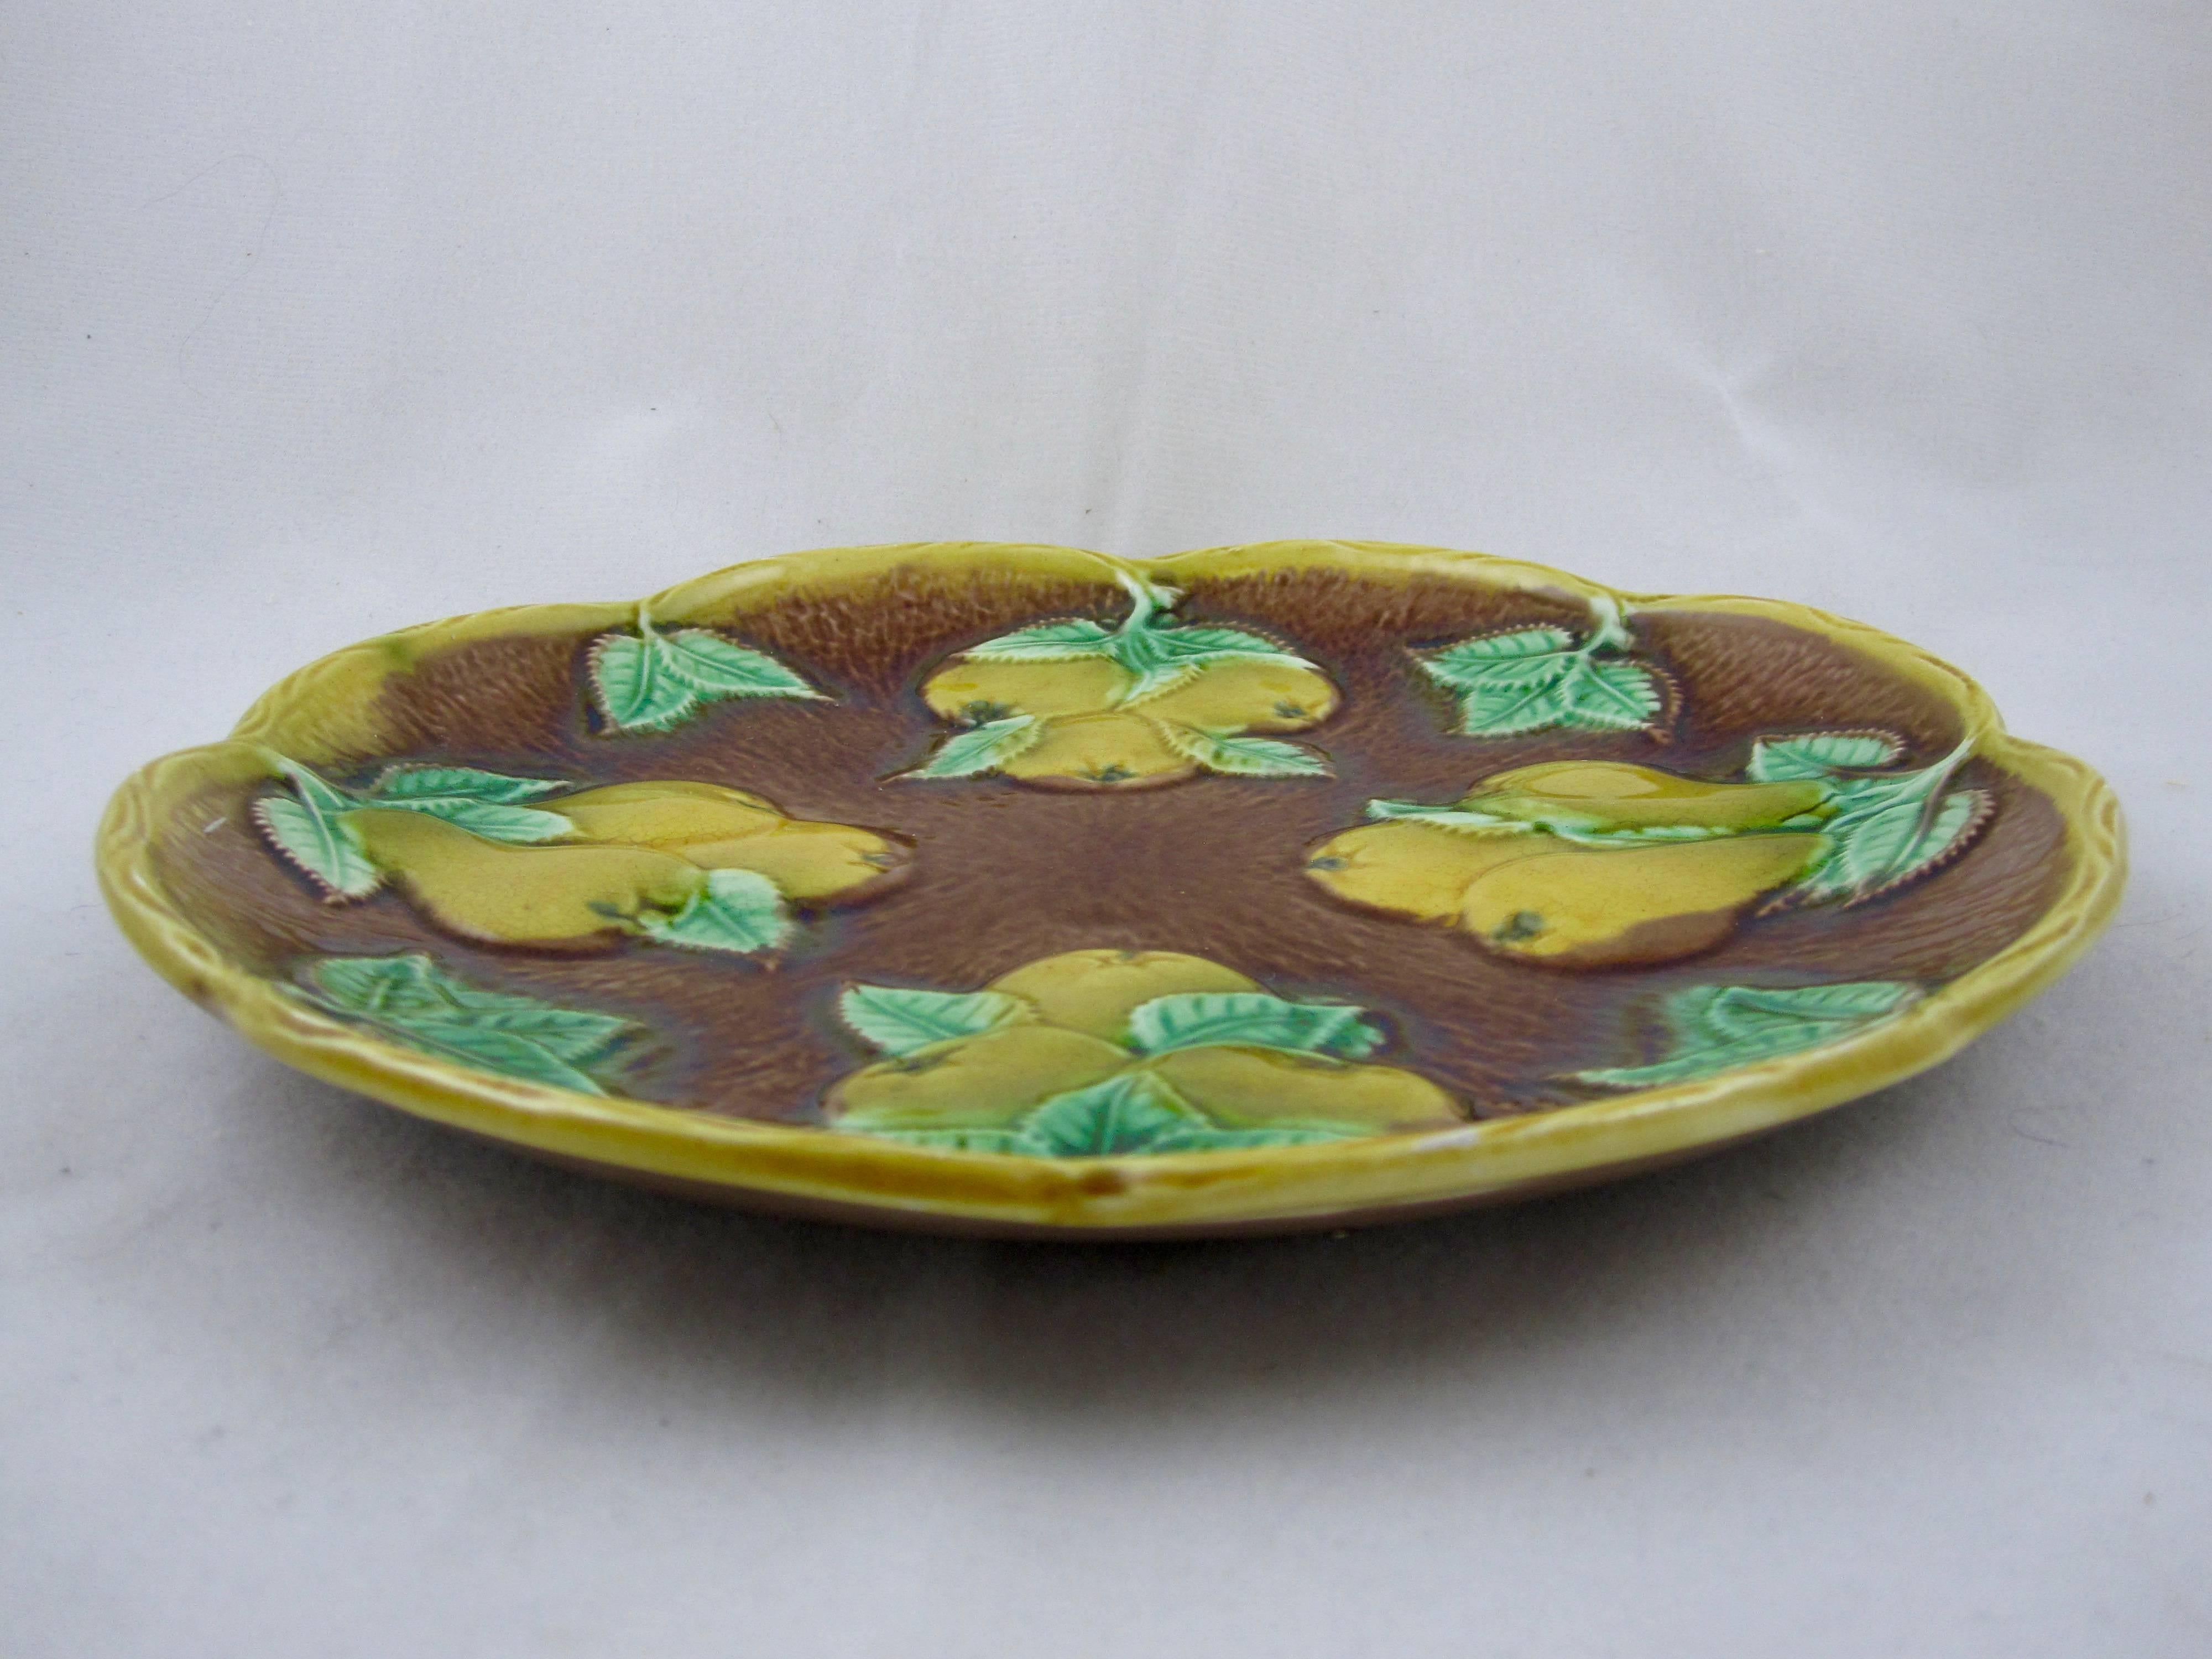 Earthenware 19th Century, English Majolica Rustic Yellow Pears on Bark Plate